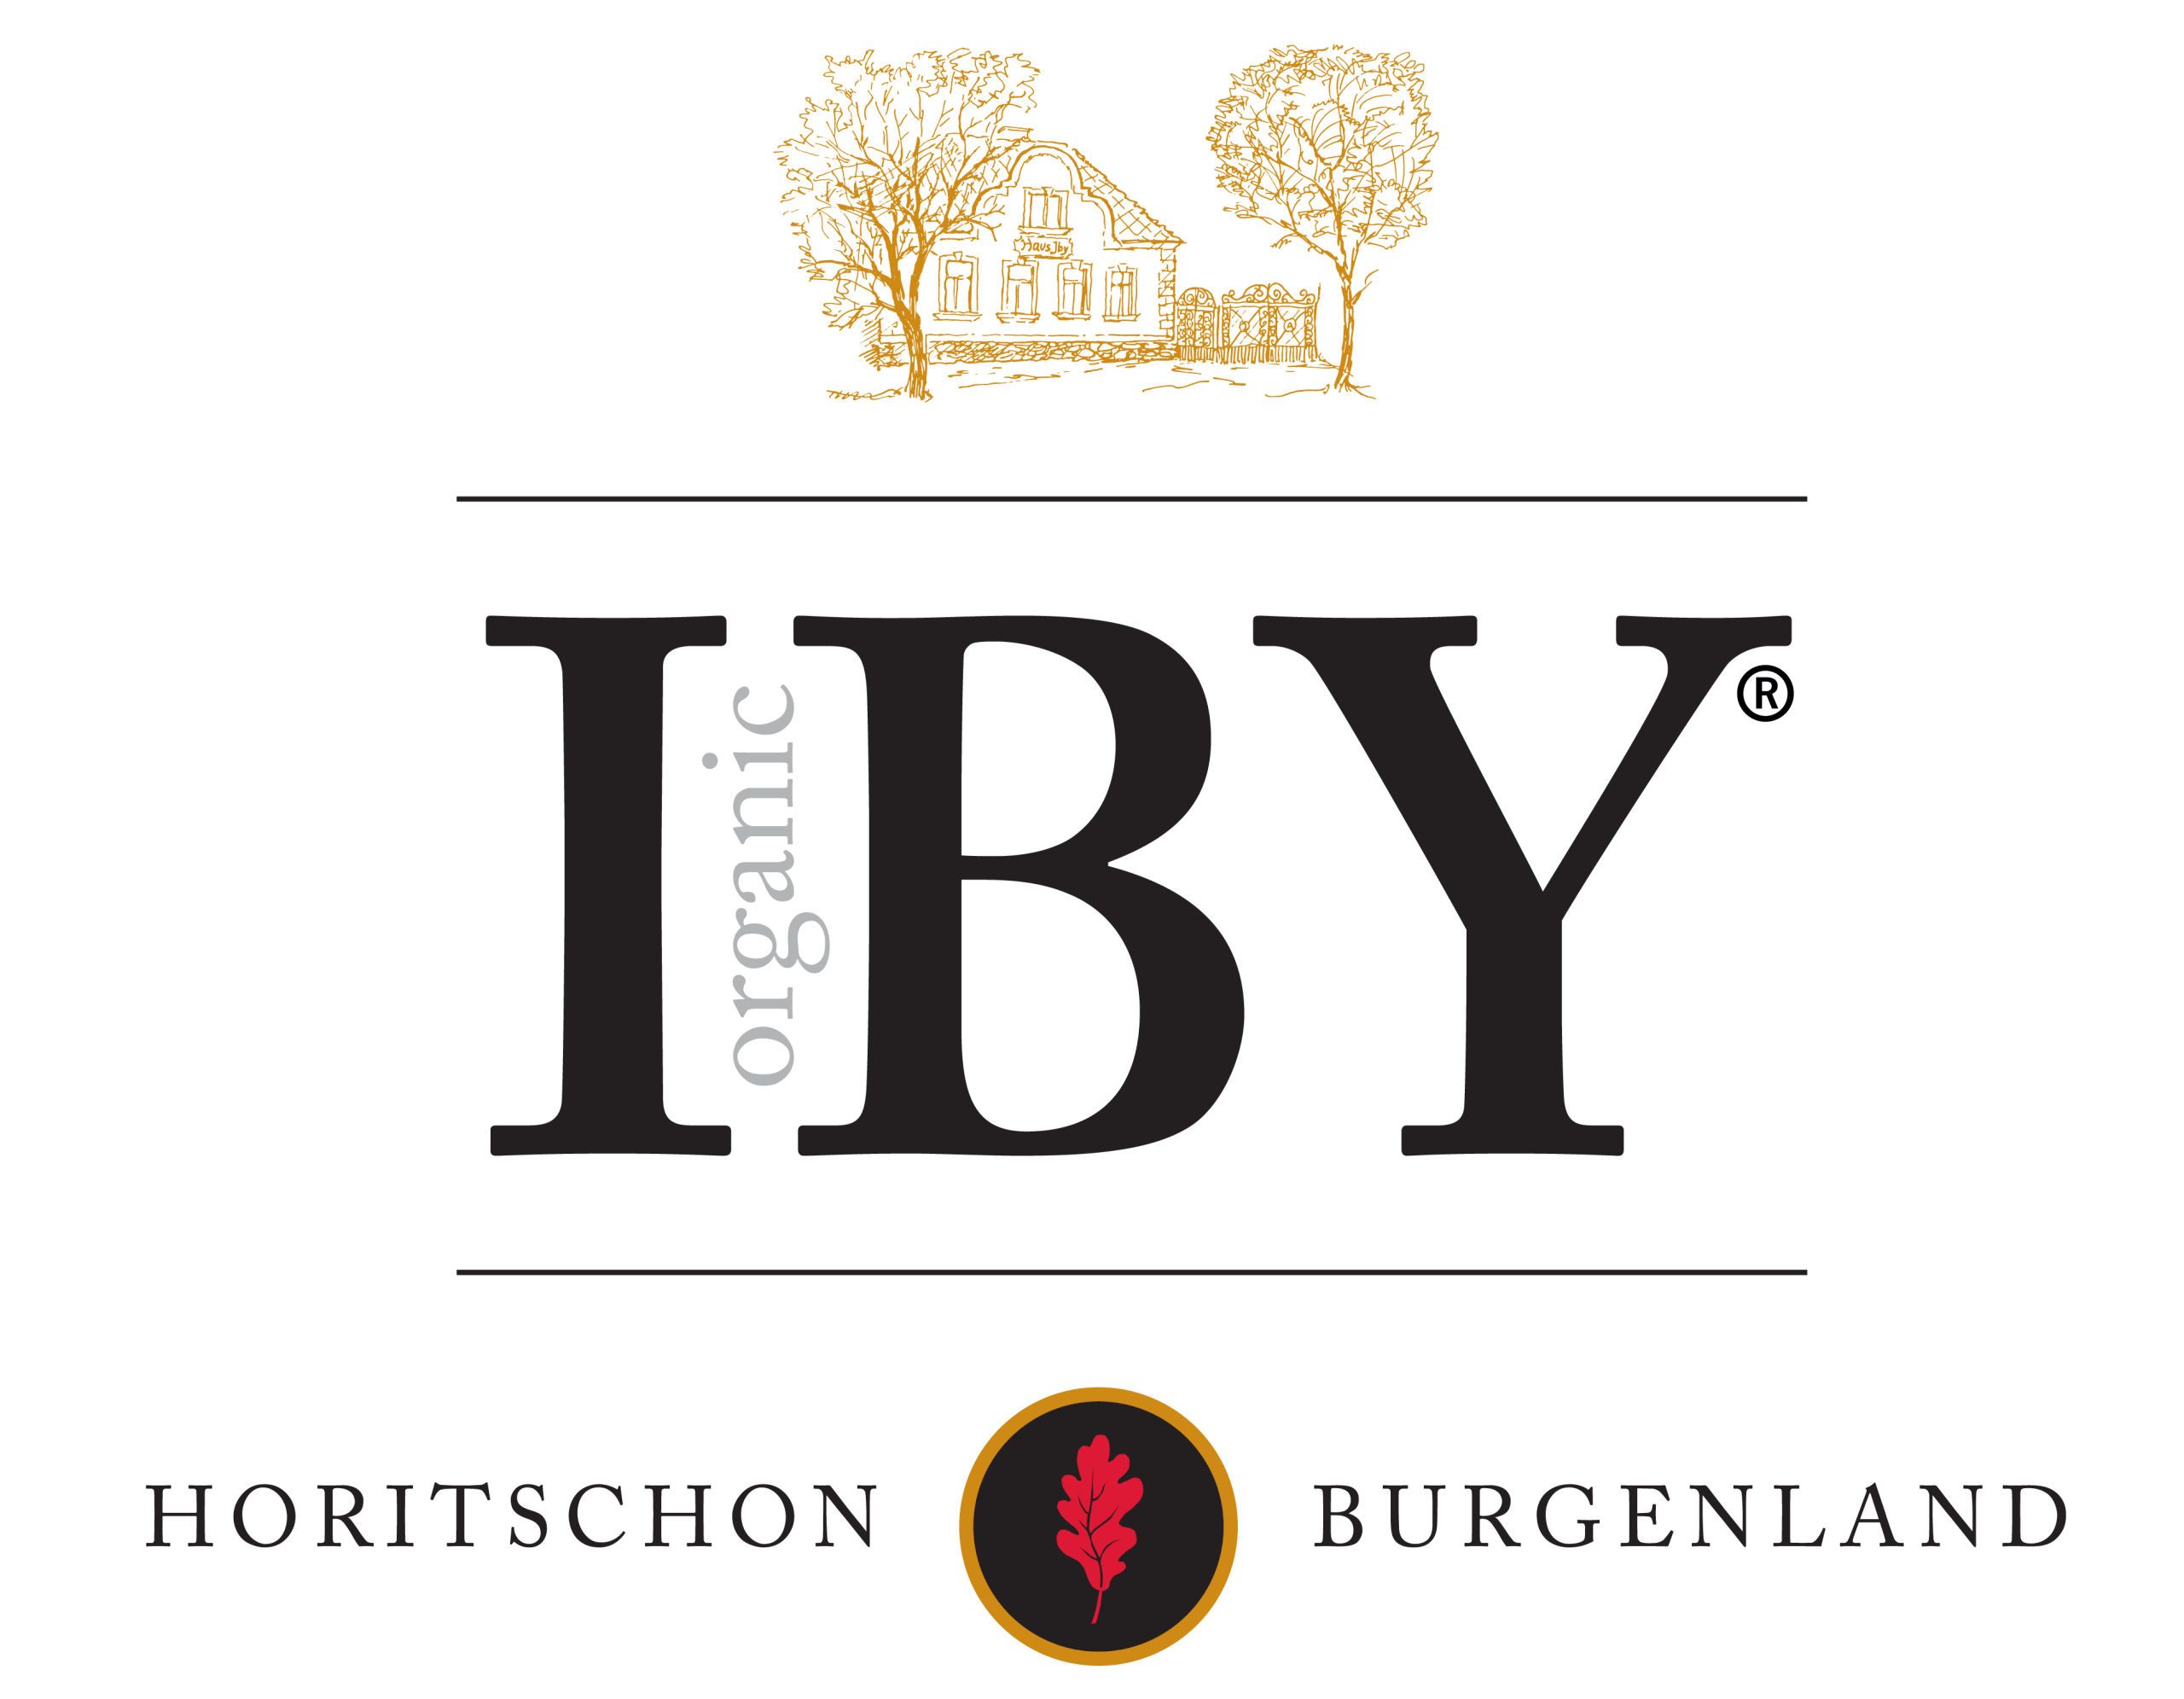 IBY Logo